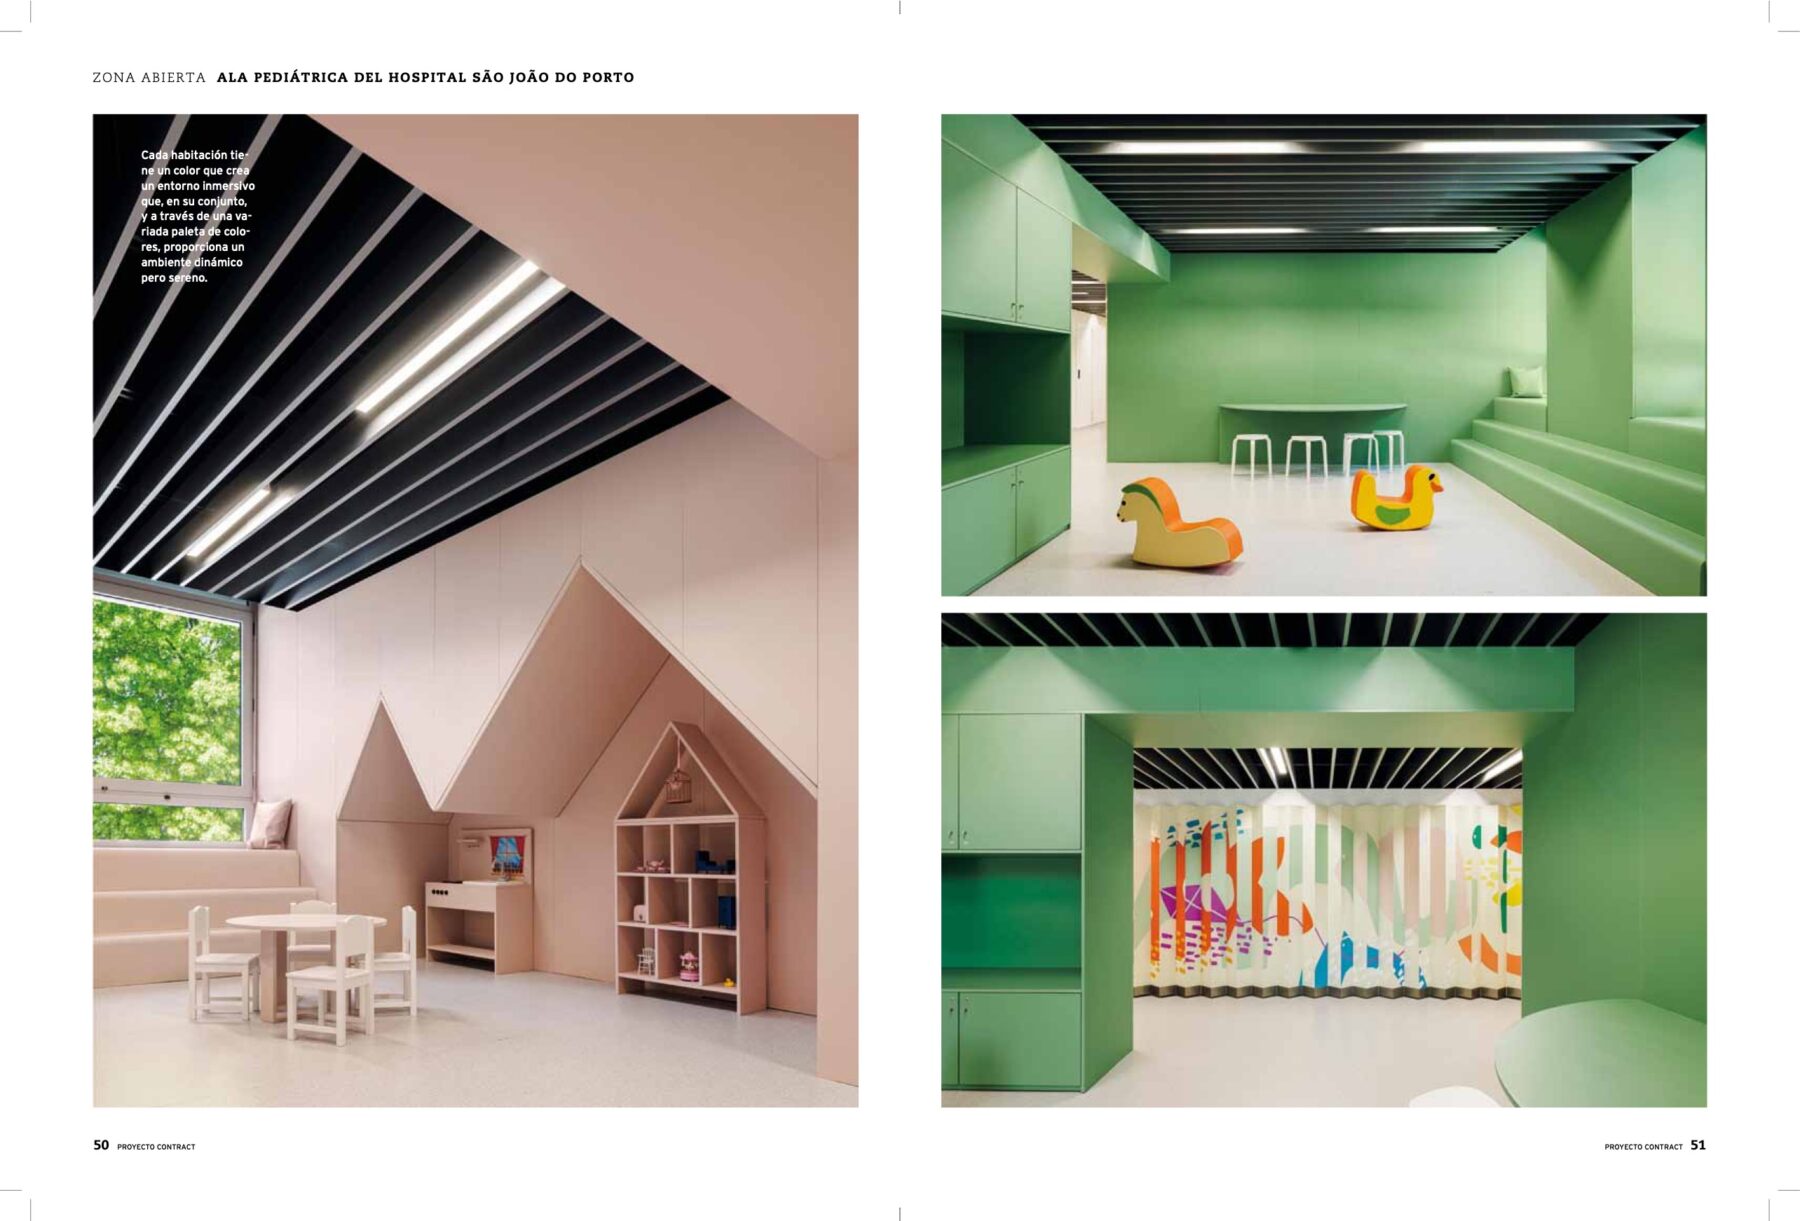 Proyecto Contract 197 do atelier ARG studio com fotografia arquitetura de ivo tavares studio - architectural photography